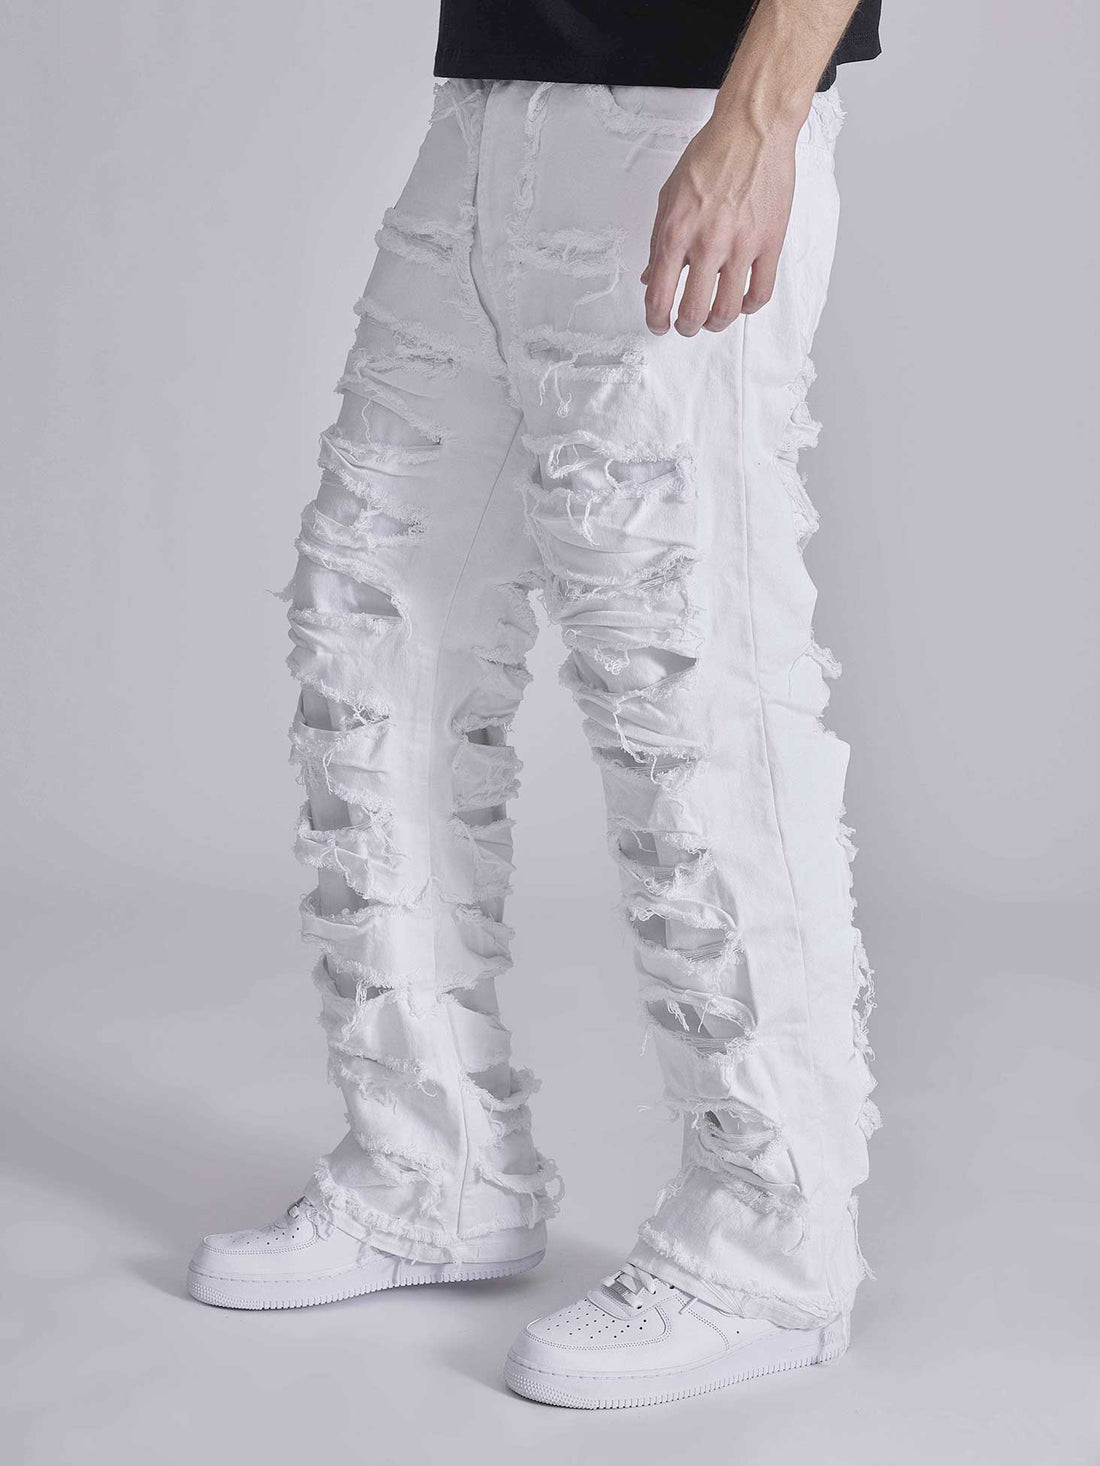 Double pants white 3.0